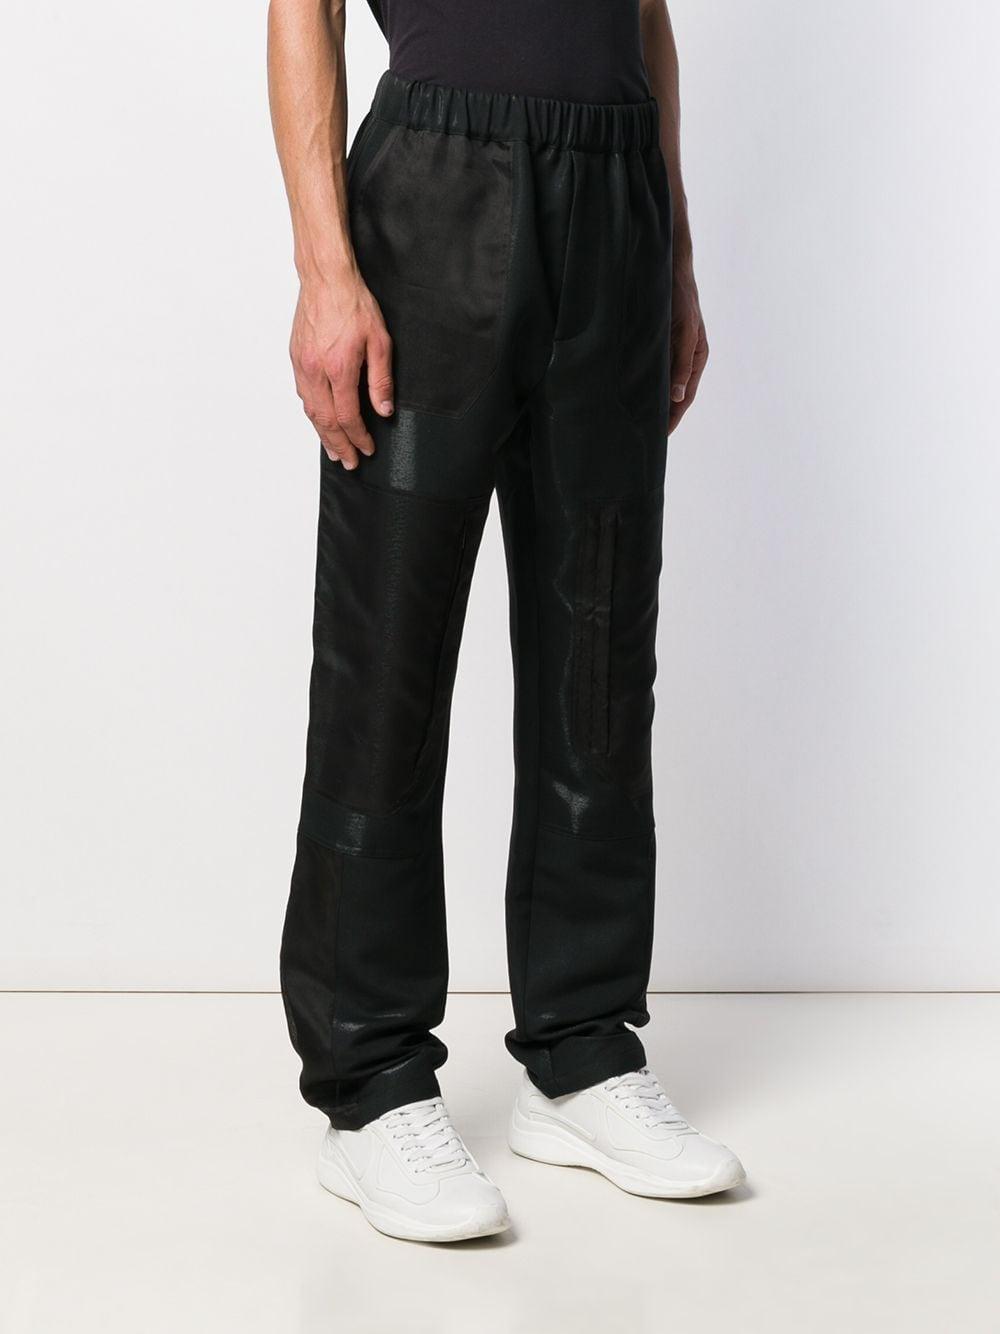 Fendi Wool Slip Pocket joggers in Black for Men - Lyst